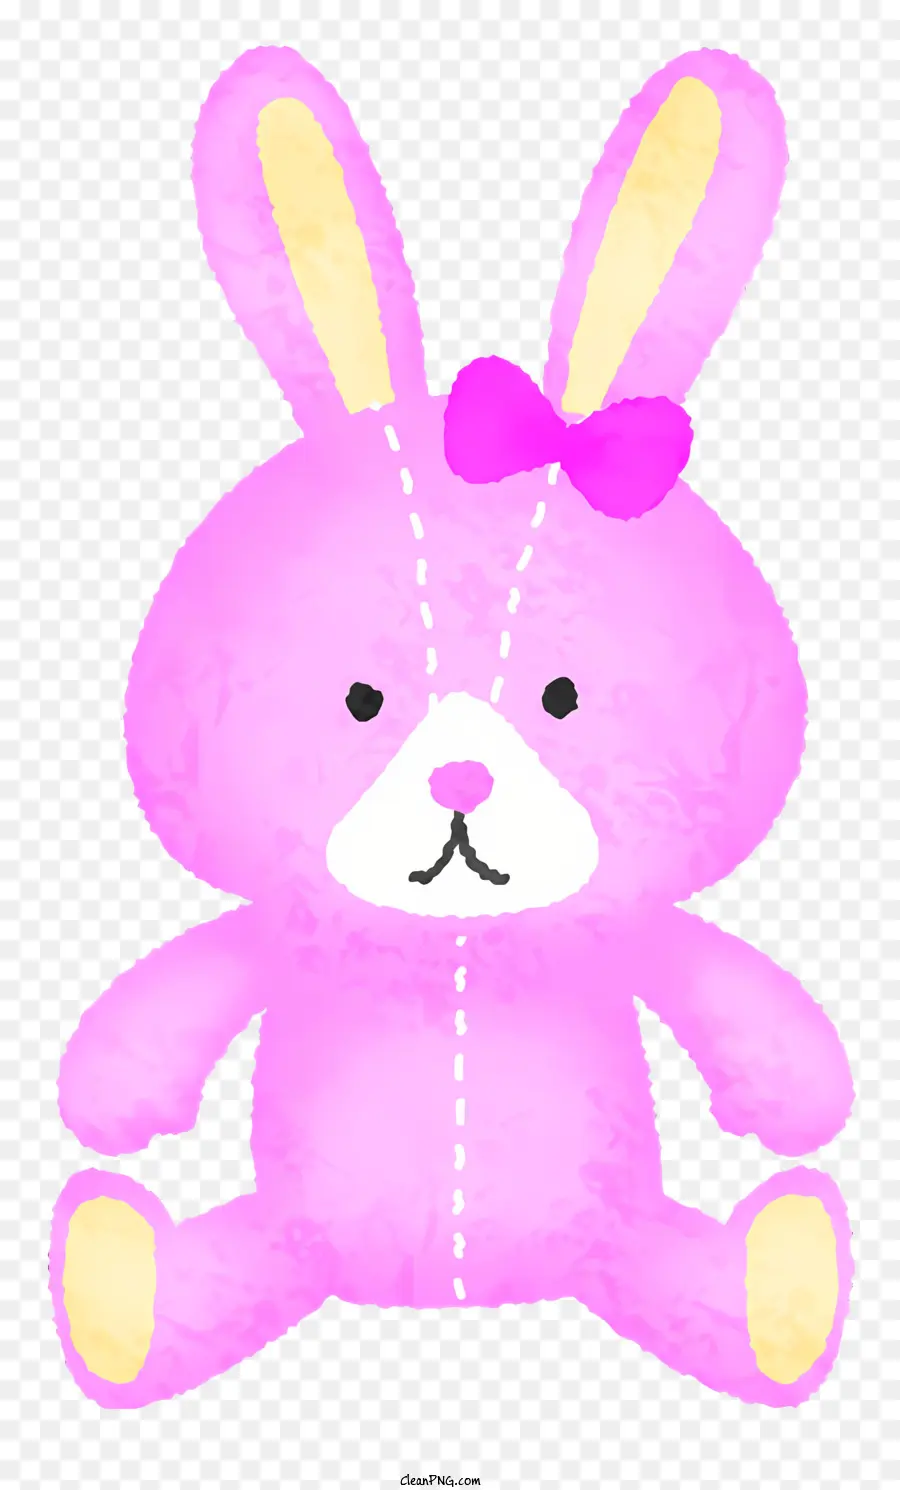 icon pink plush toy rabbit pink bow plush toy rabbit